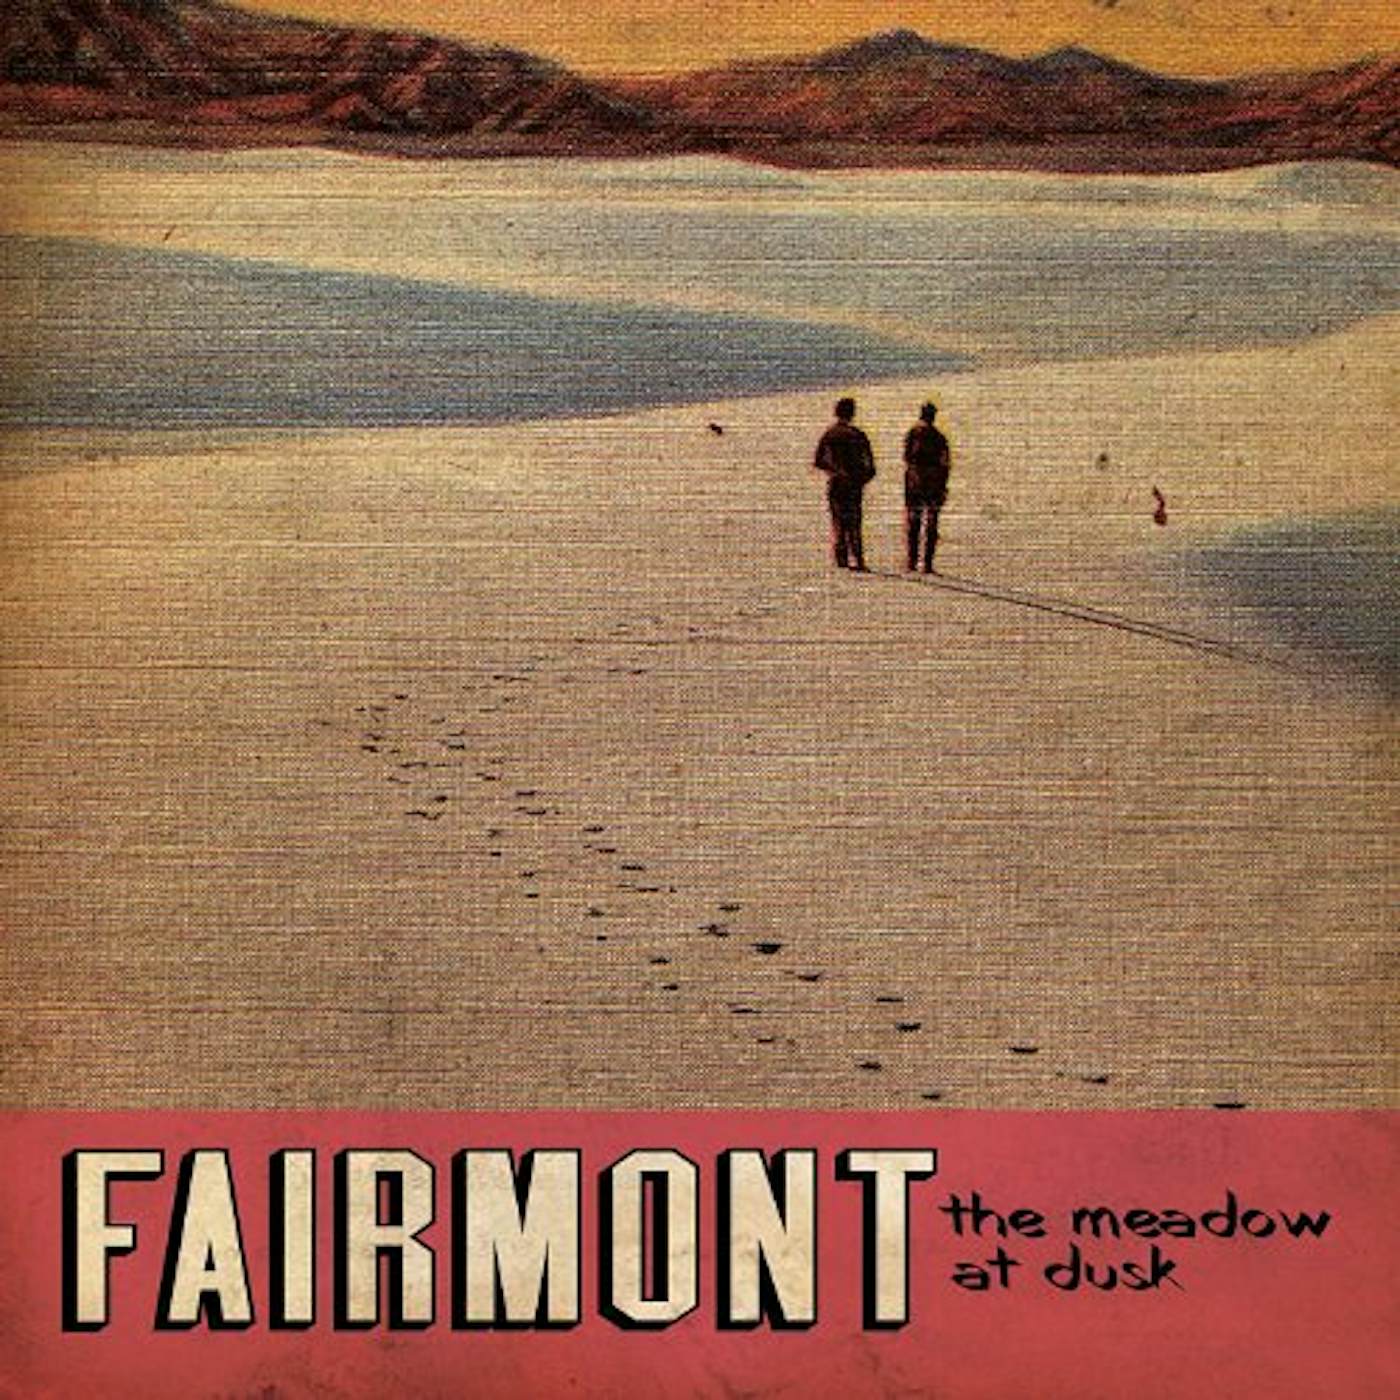 Fairmont MEADOW AT DUSK Vinyl Record